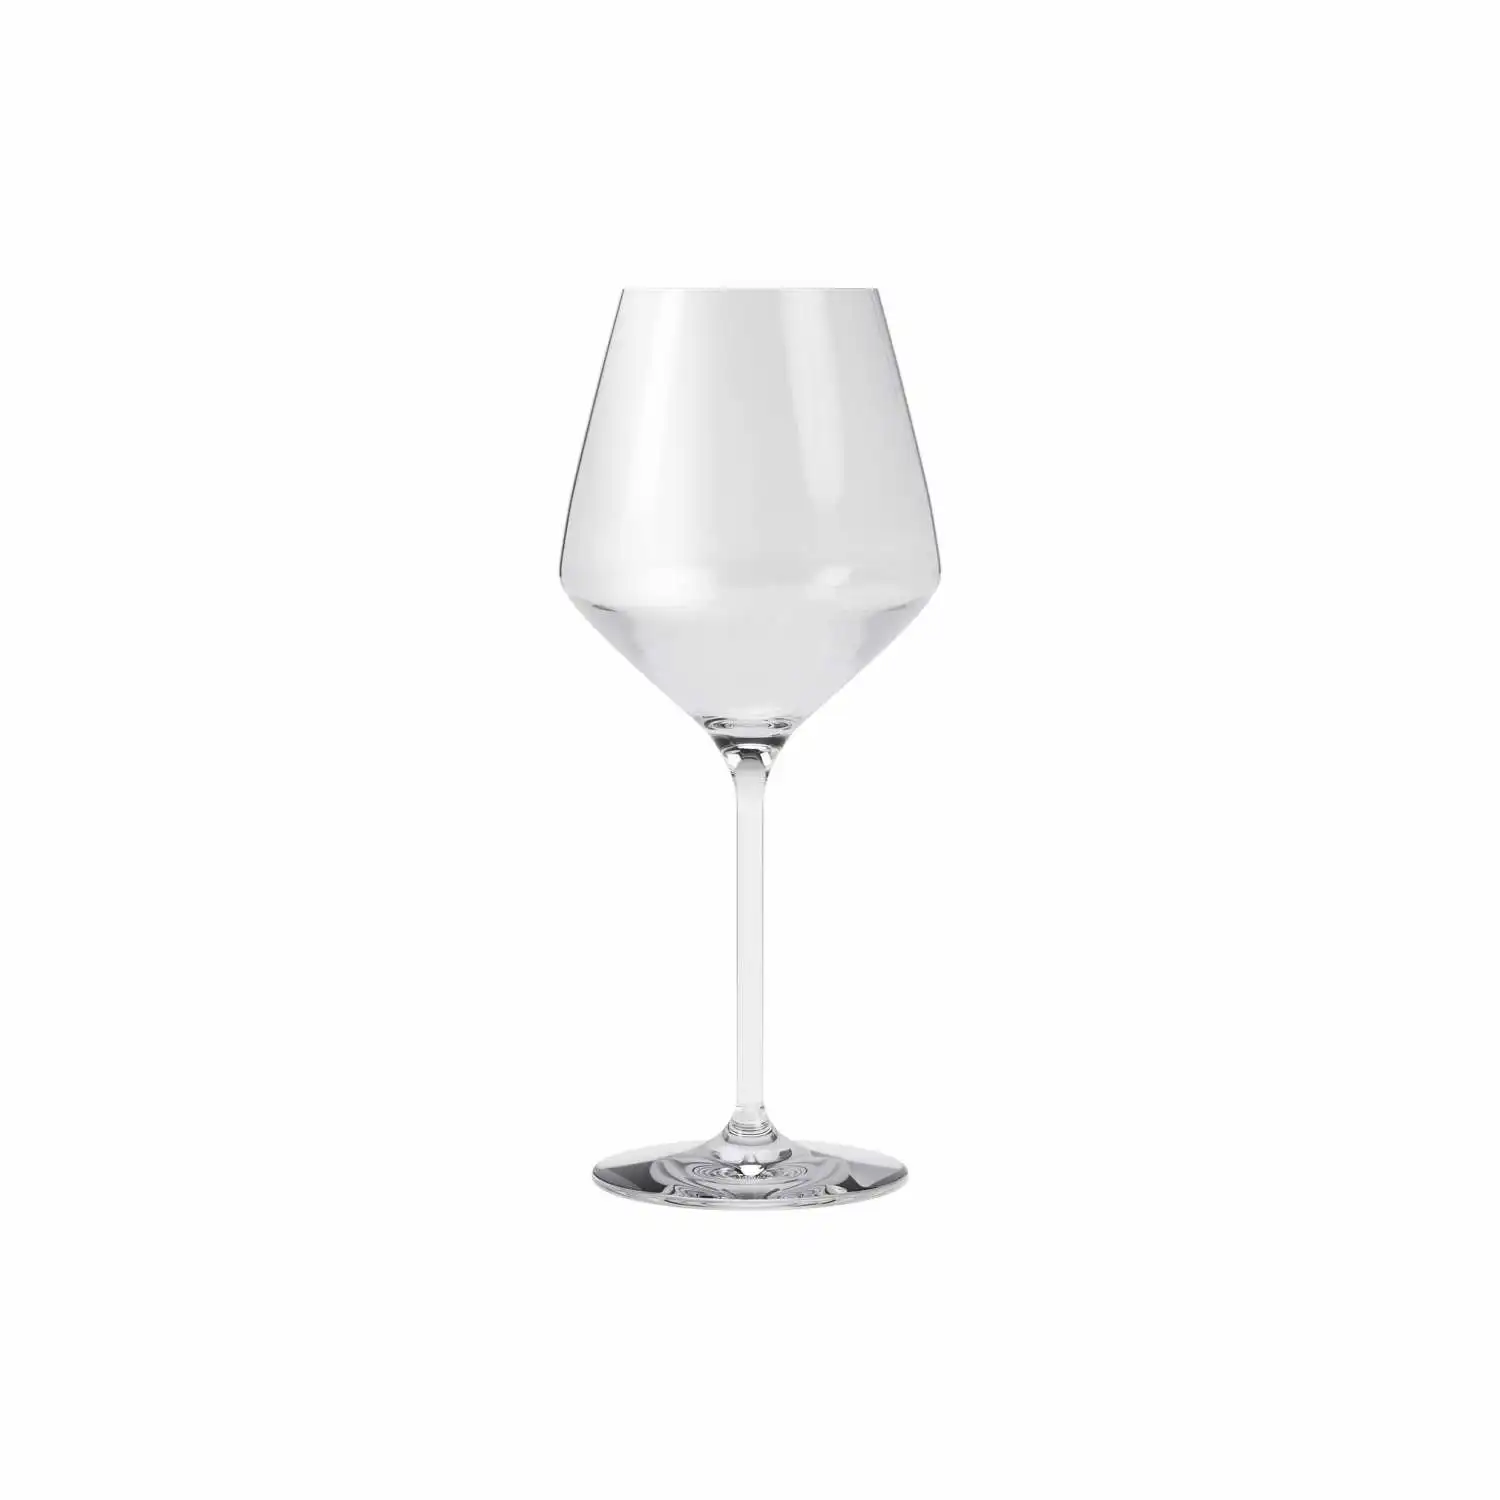 541201-red-wine-glass-legio-nova-1pcs-noregi.webp